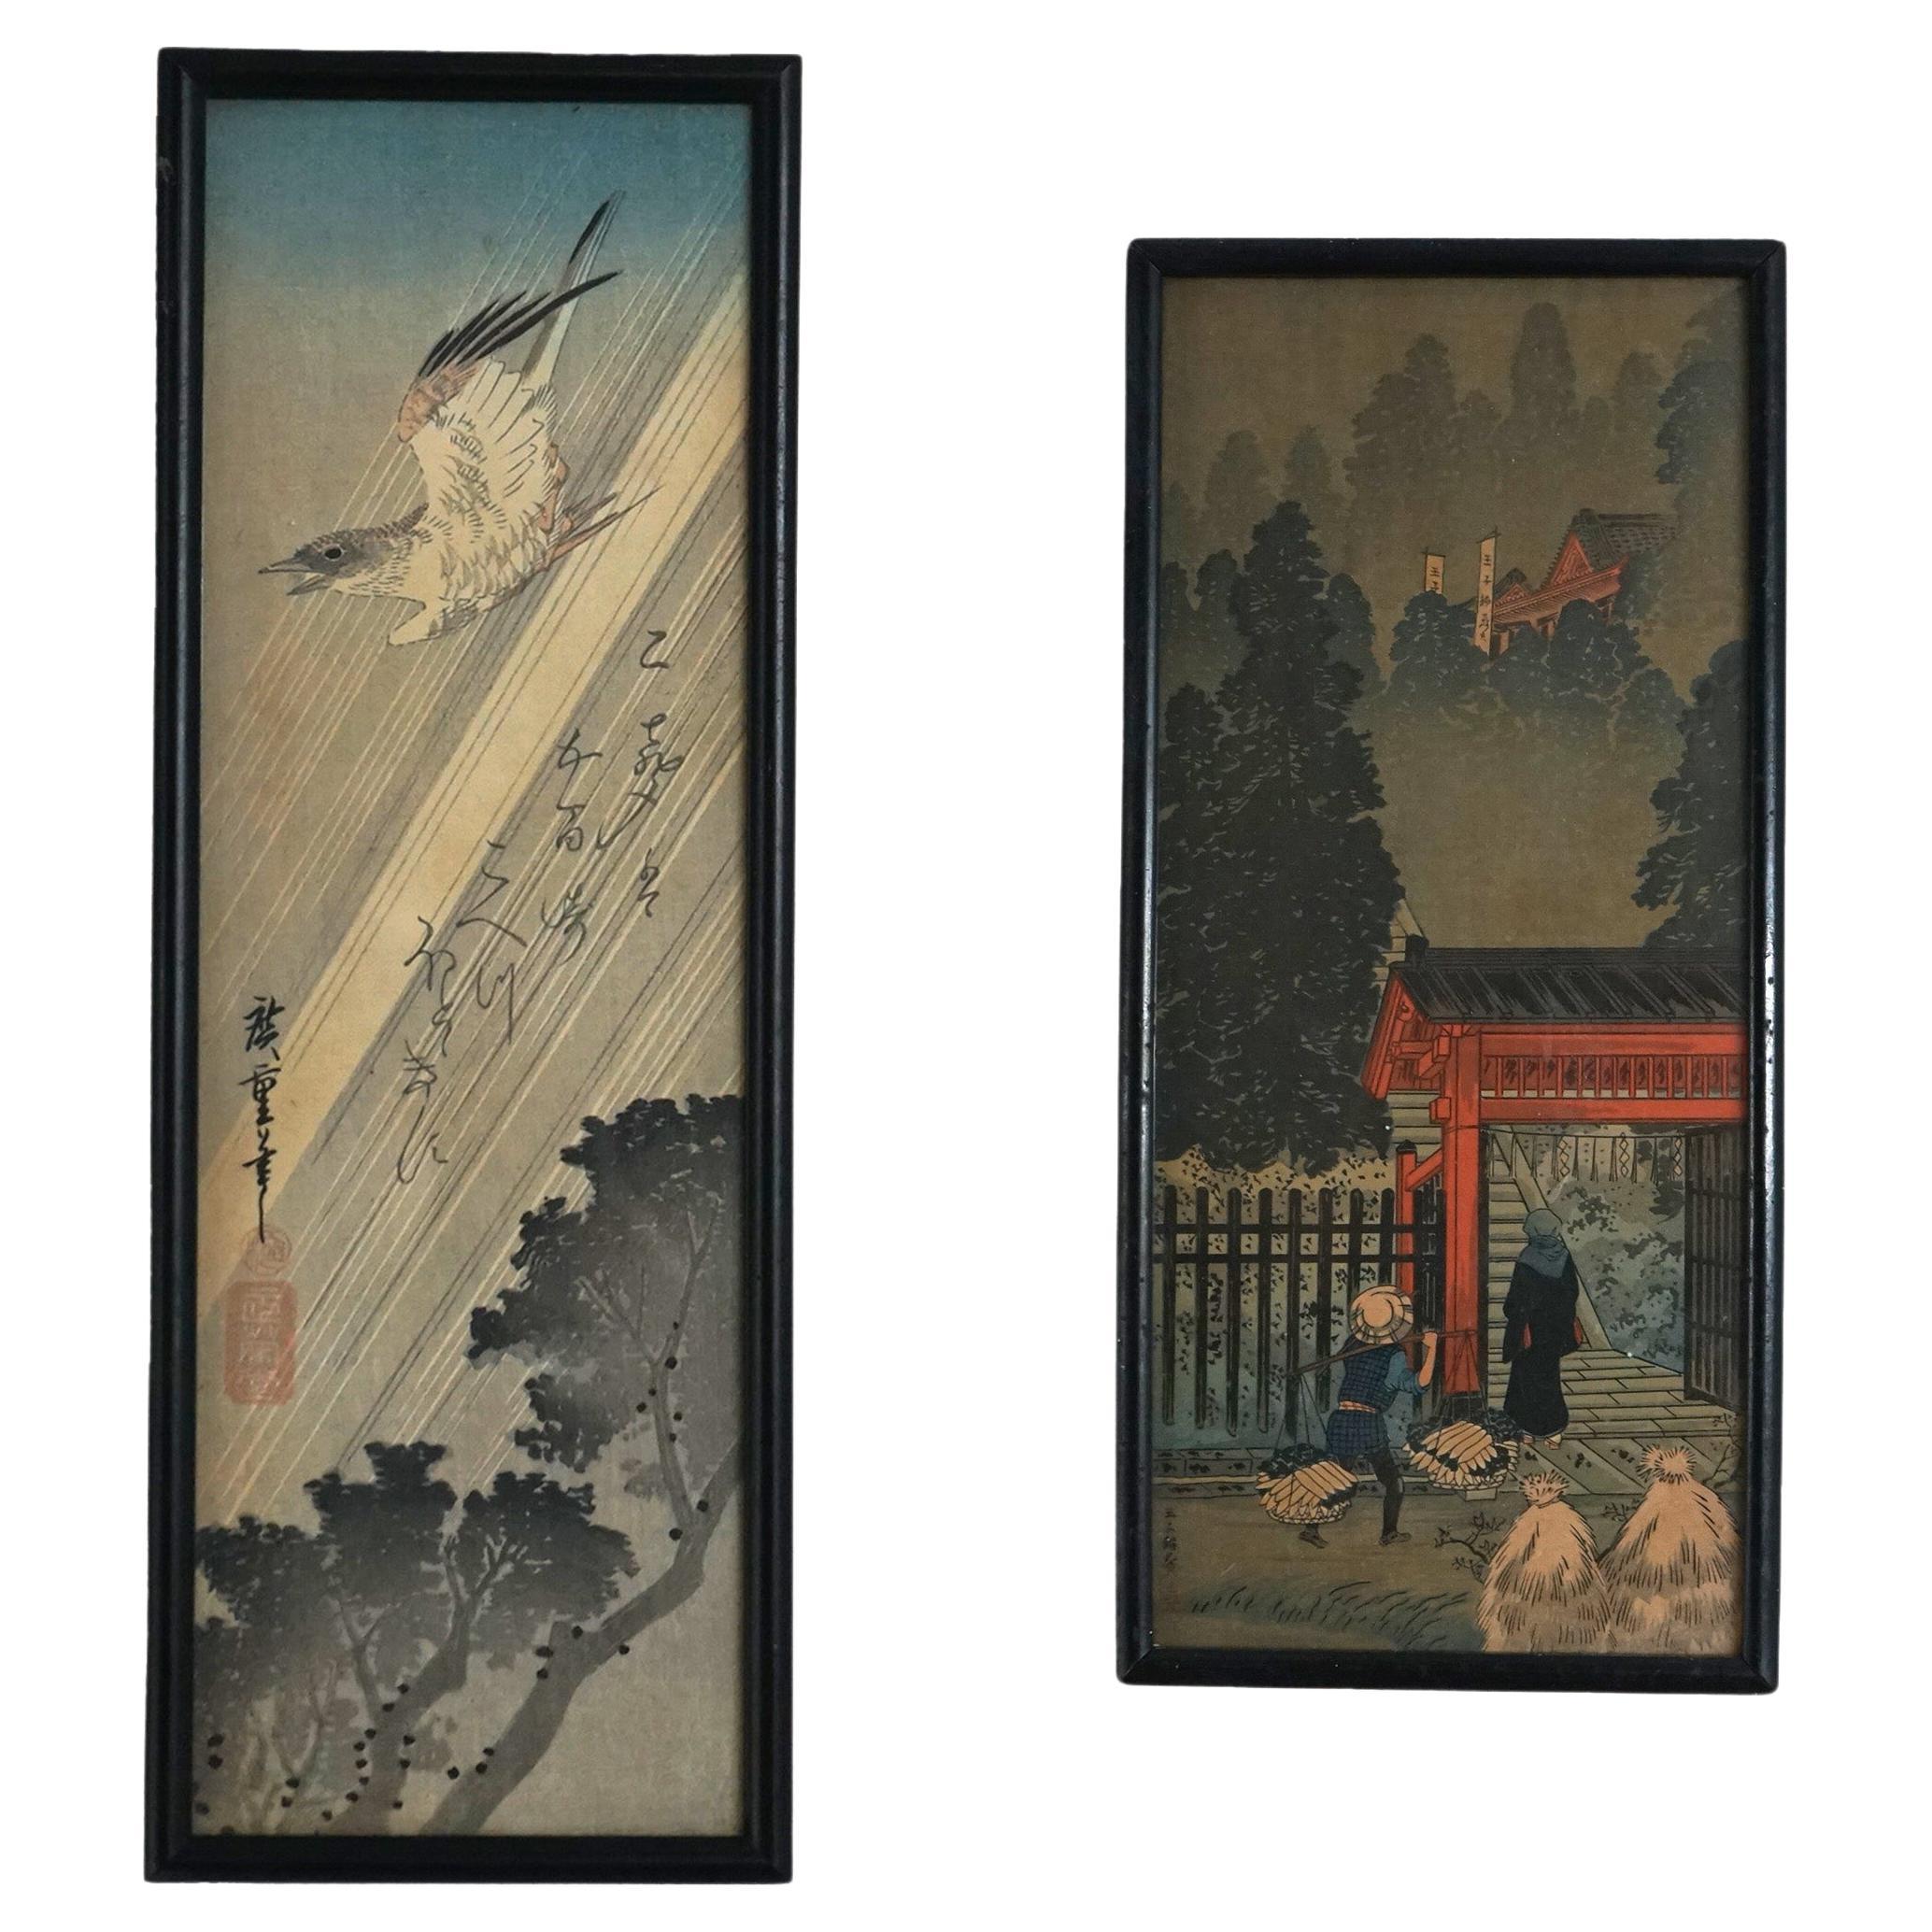 Japanische Farbholzschnitte von Utagawa Hiroshige und Hiroaki Takahashi 20.